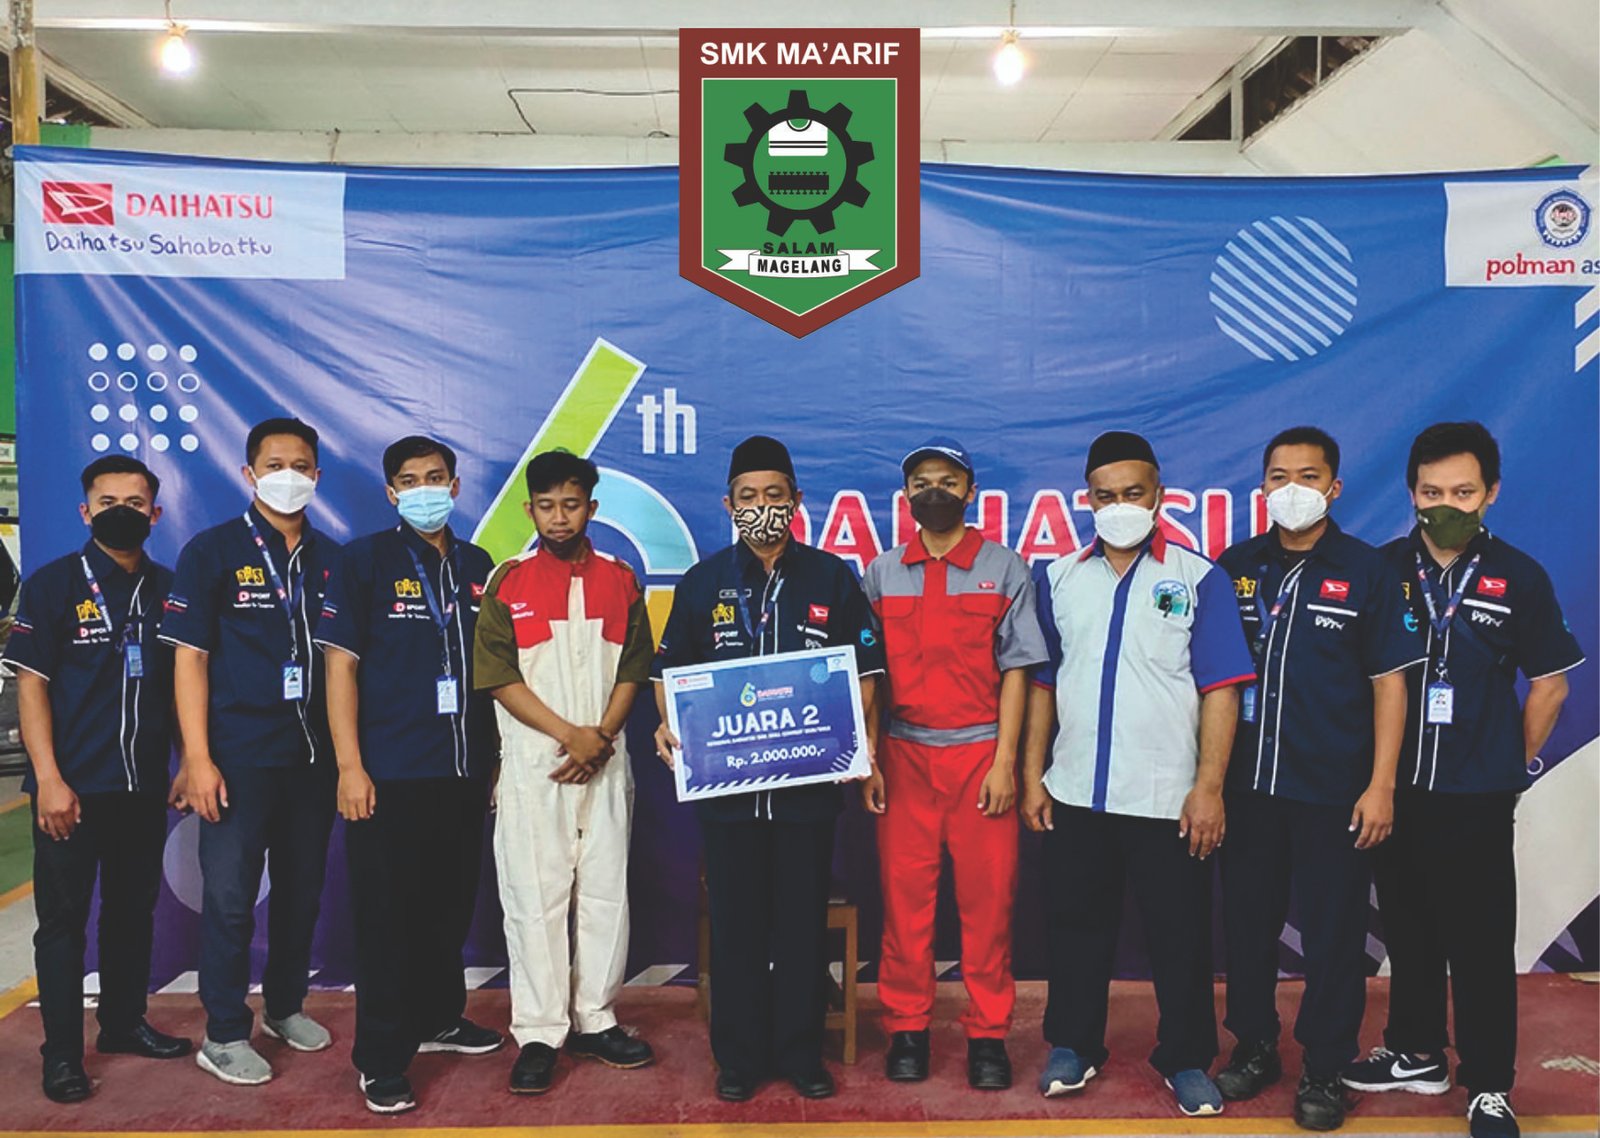 HADIAH. Pihak SMK Maarif Salam Magelang, Jawa Tengah menerima hadiah dalam Ajang Daihatsu SMK Skill Contest.